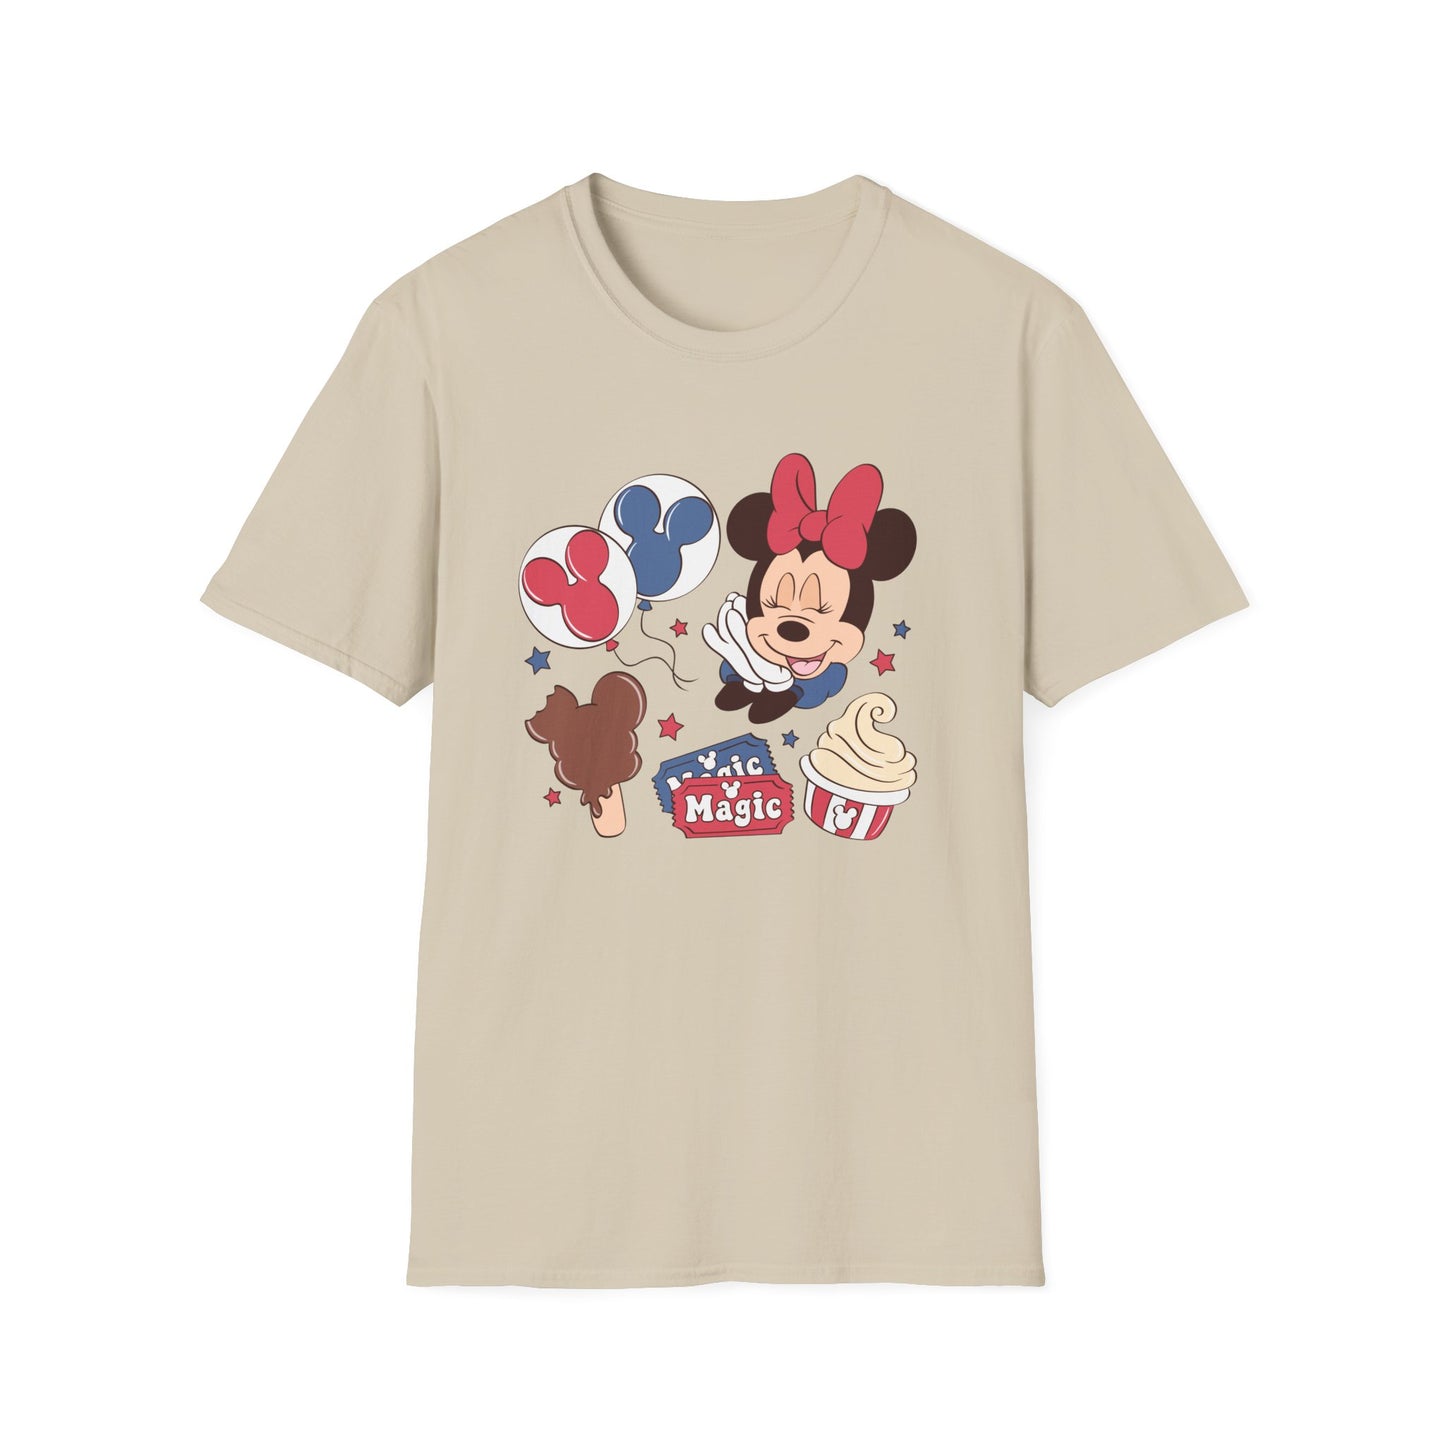 RWB Girl Mouse Park Snacks & Fun T-Shirt